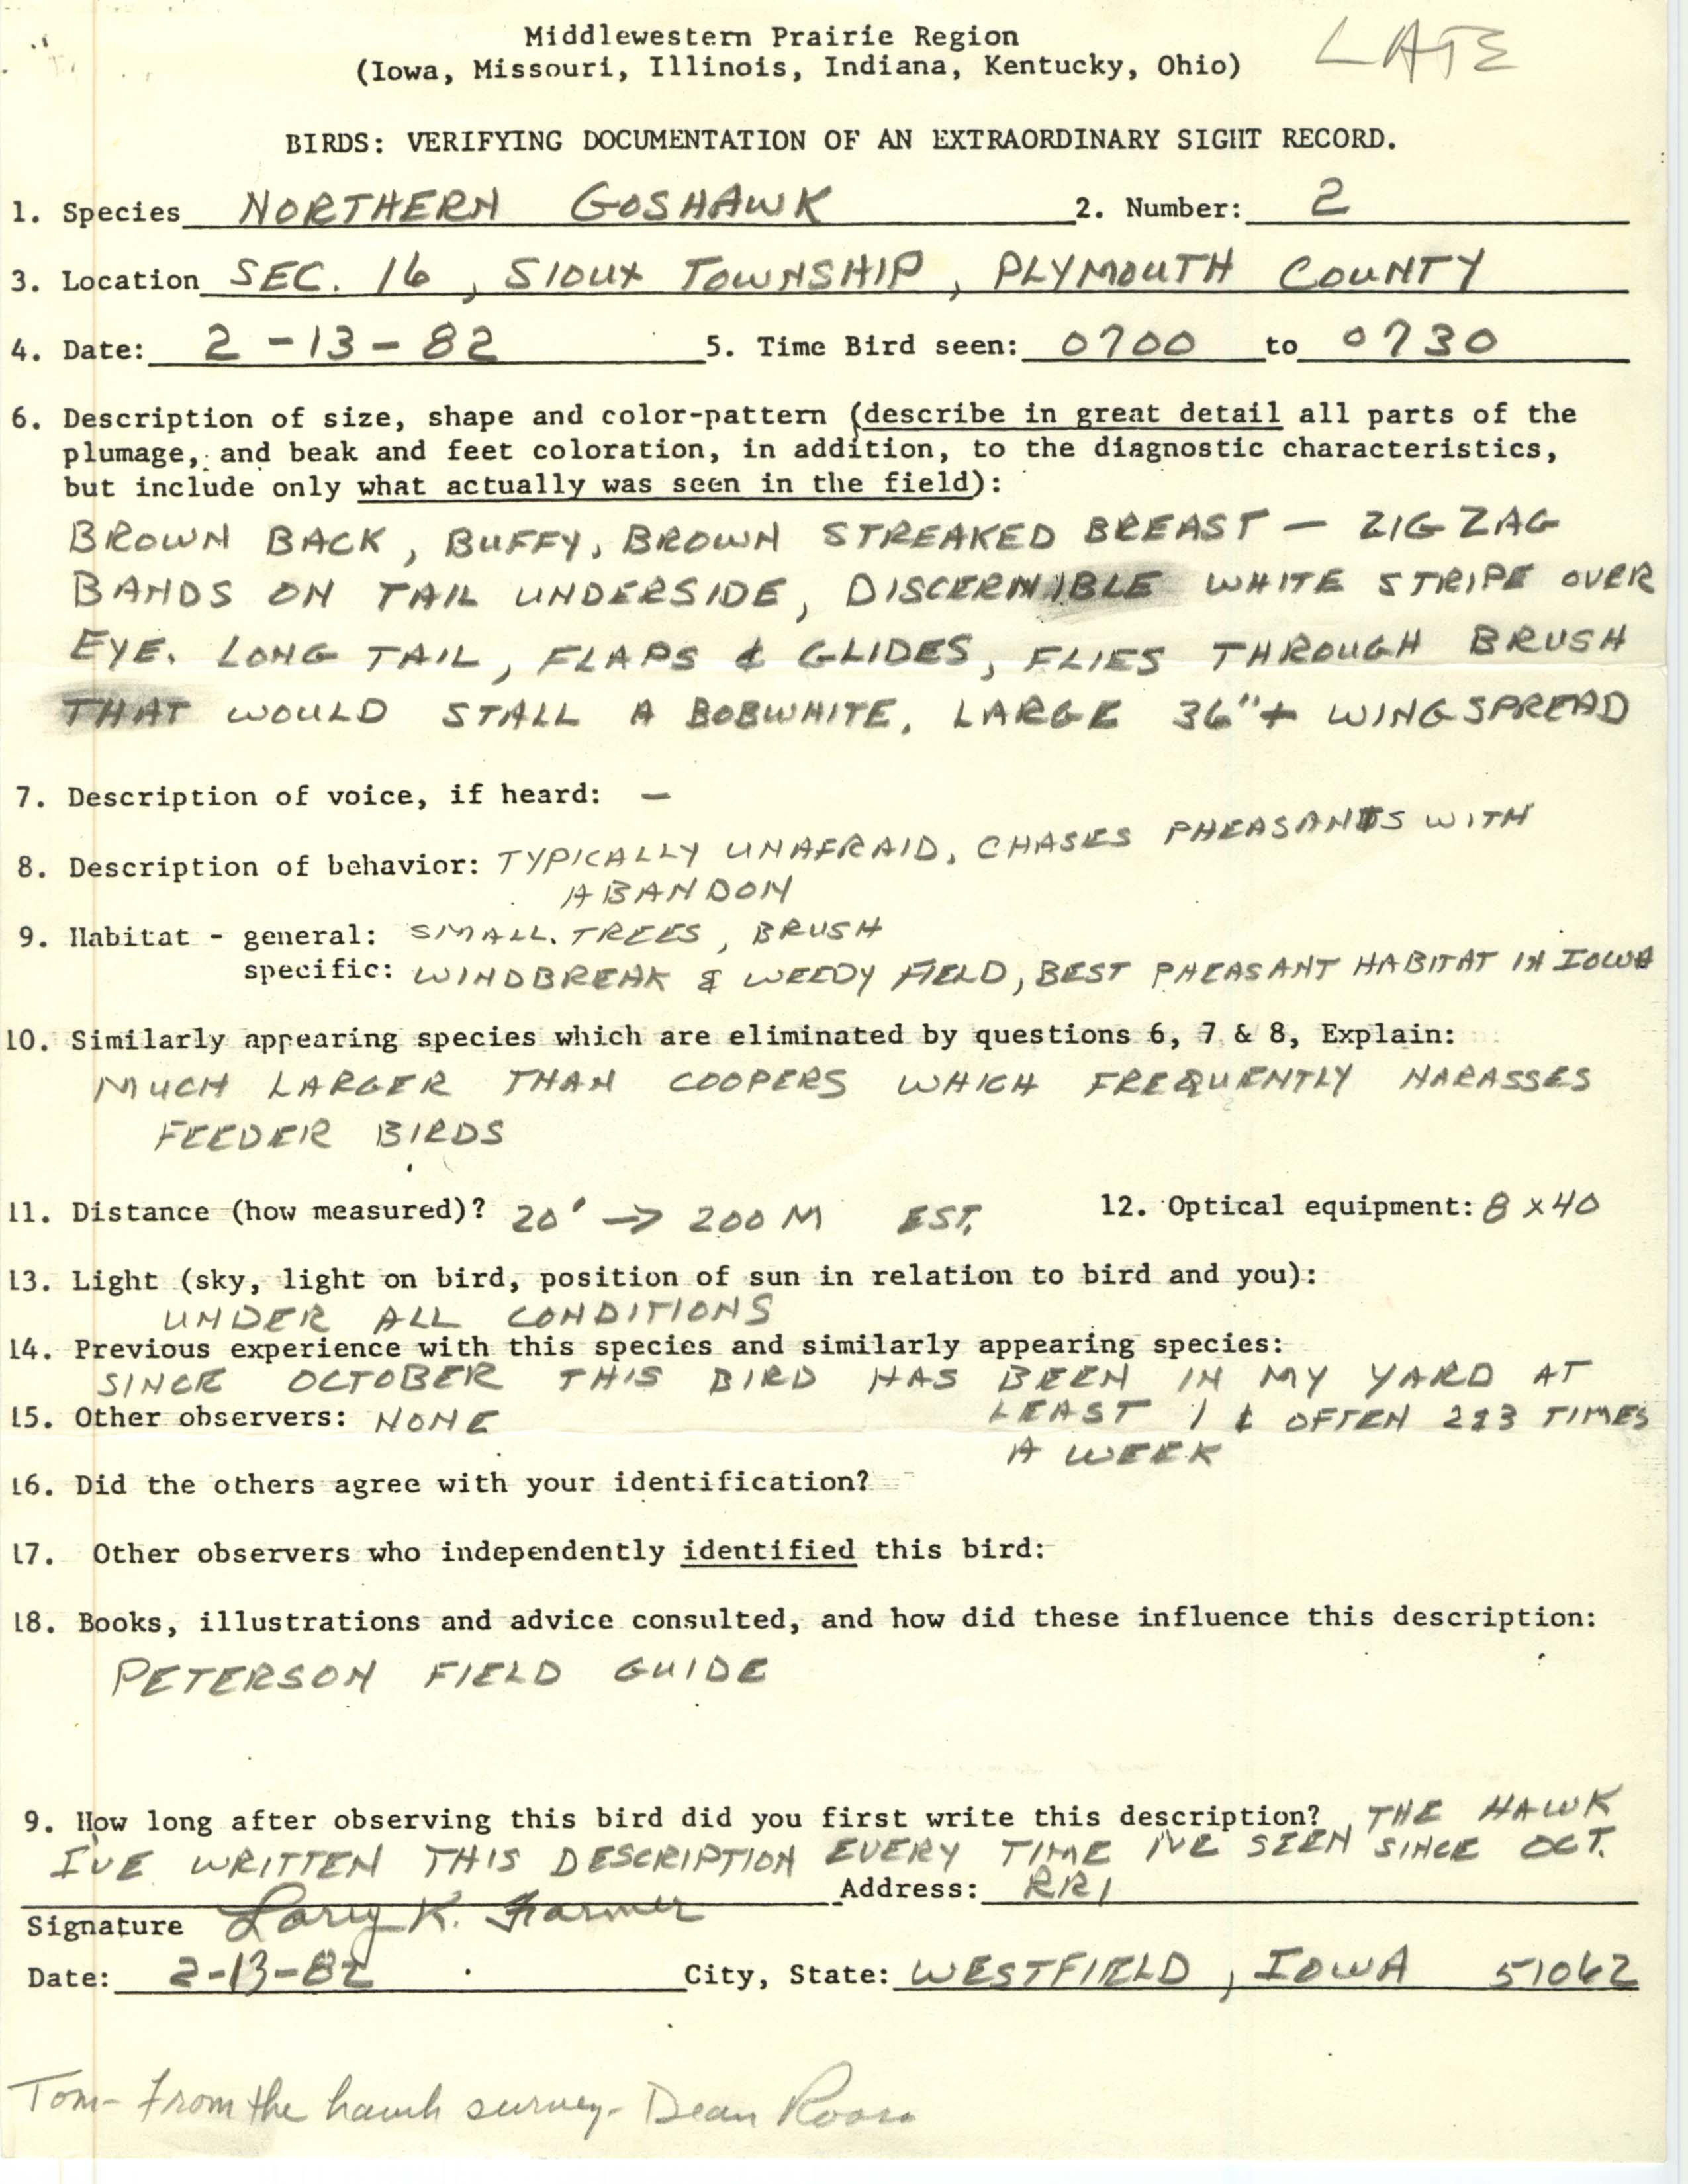 Rare bird documentation form for Northern Goshawk at Sioux Township, 1982